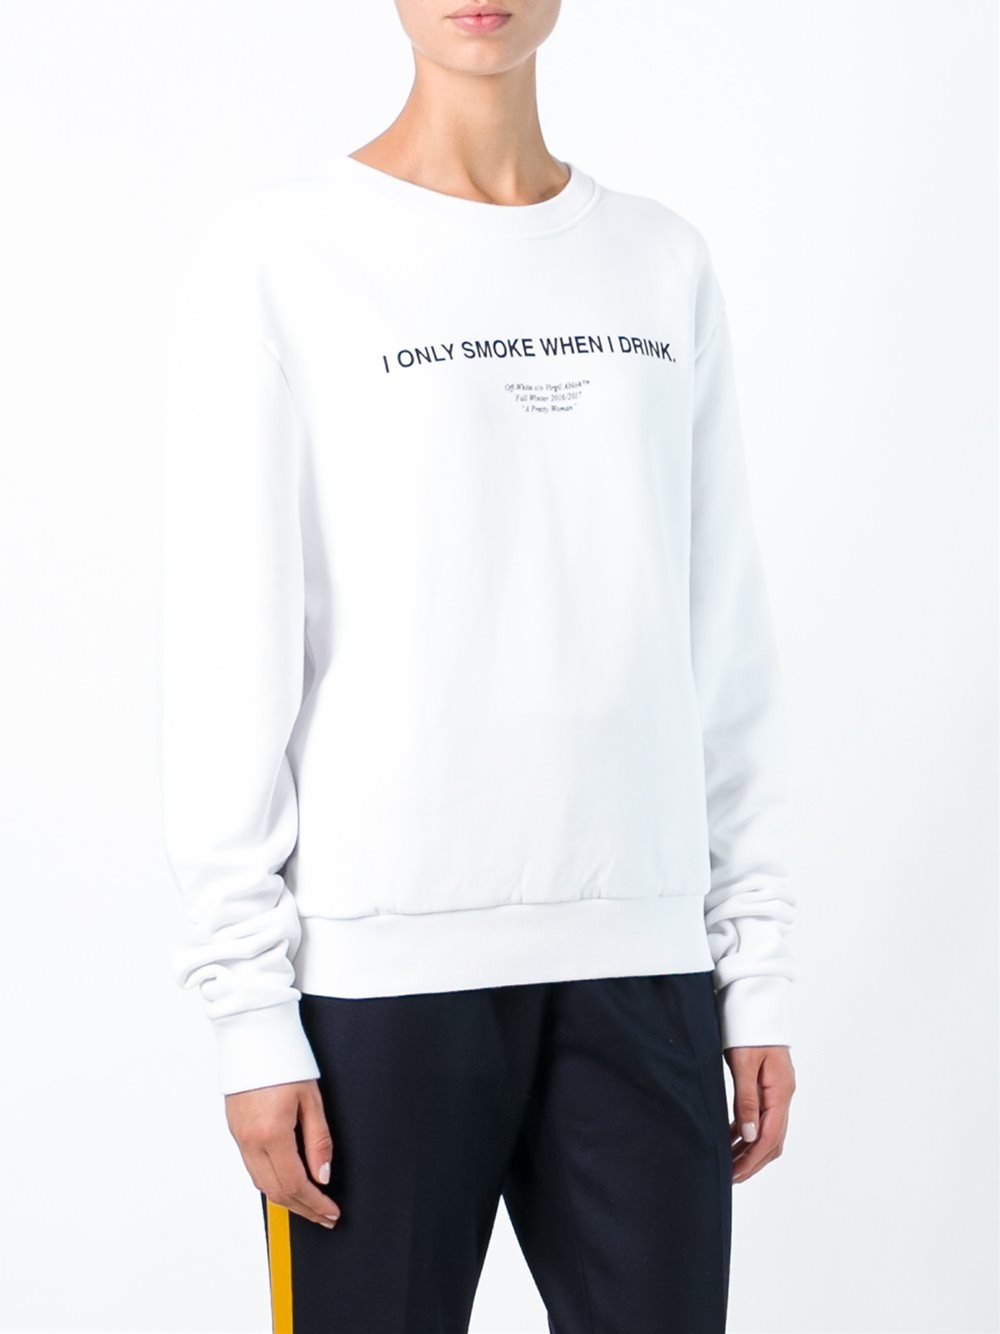 Off-White c/o Virgil Abloh Quote Print Sweatshirt in Black | Lyst